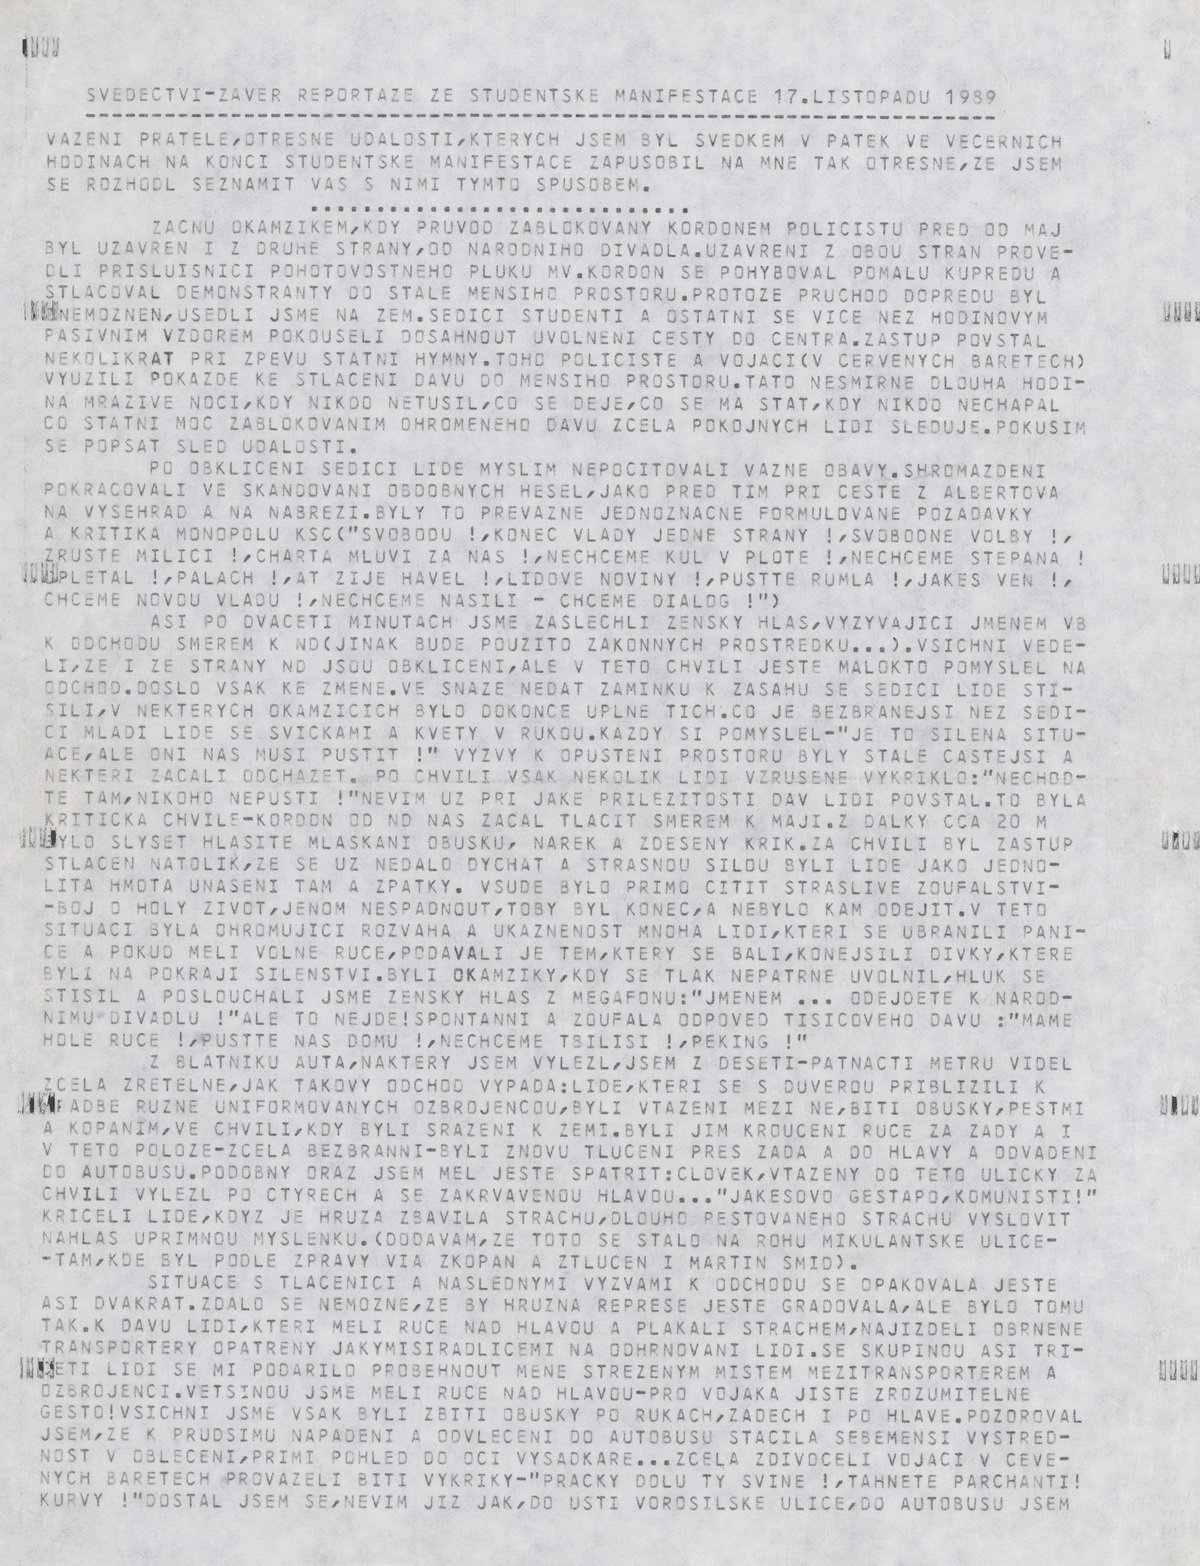 Svedectvi-zaver reportaze ze studentske manifestace 17.listopadu 1989 (1.strana). Archív Heleny Kociskej